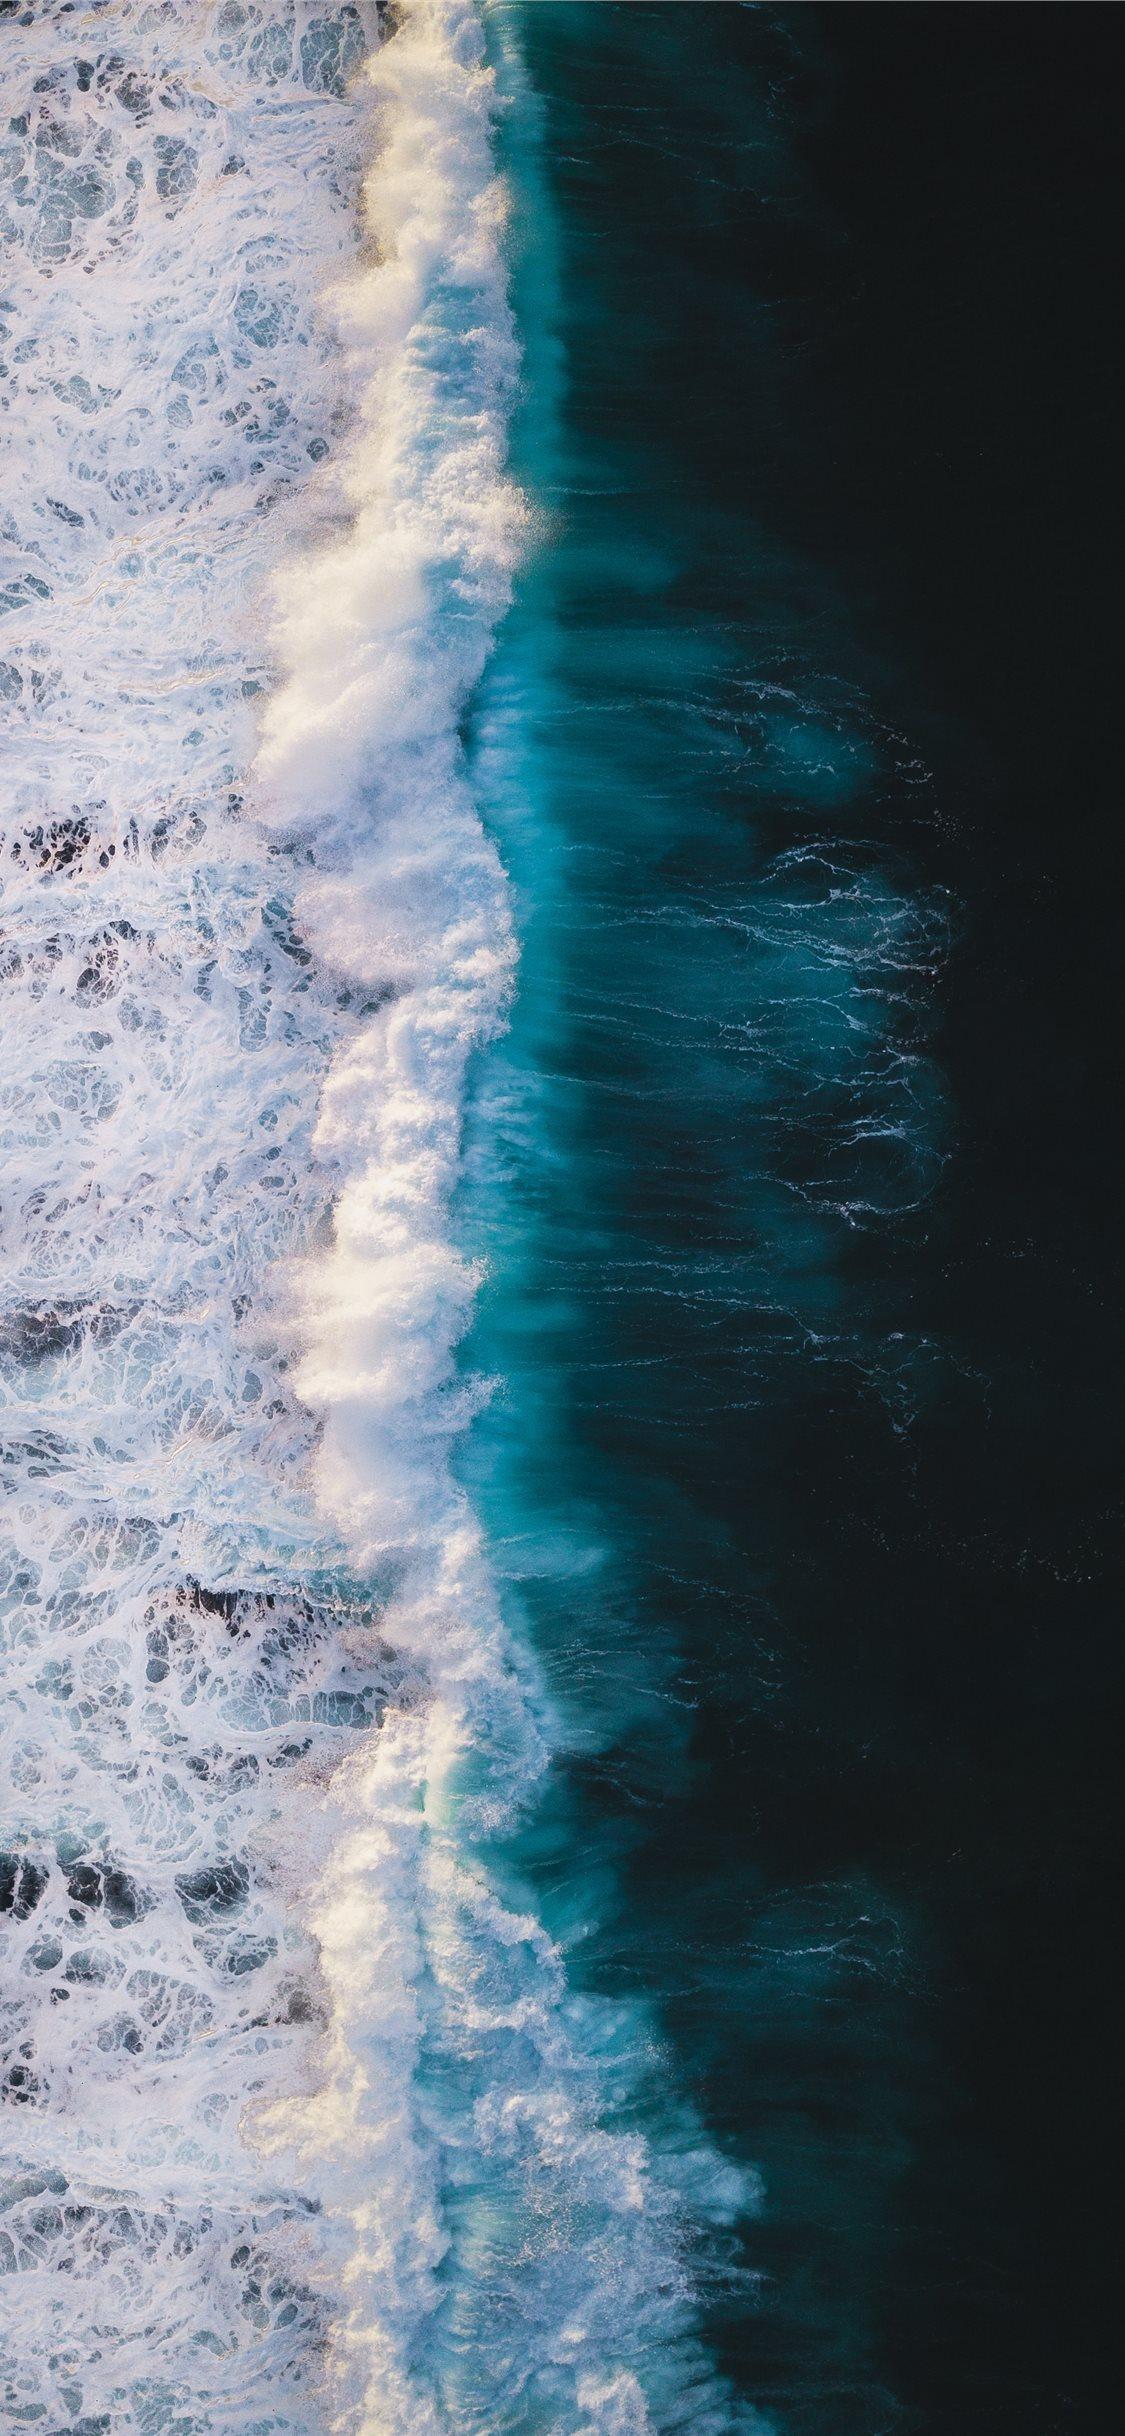 Ocean wave iPhone Wallpaper Free Download